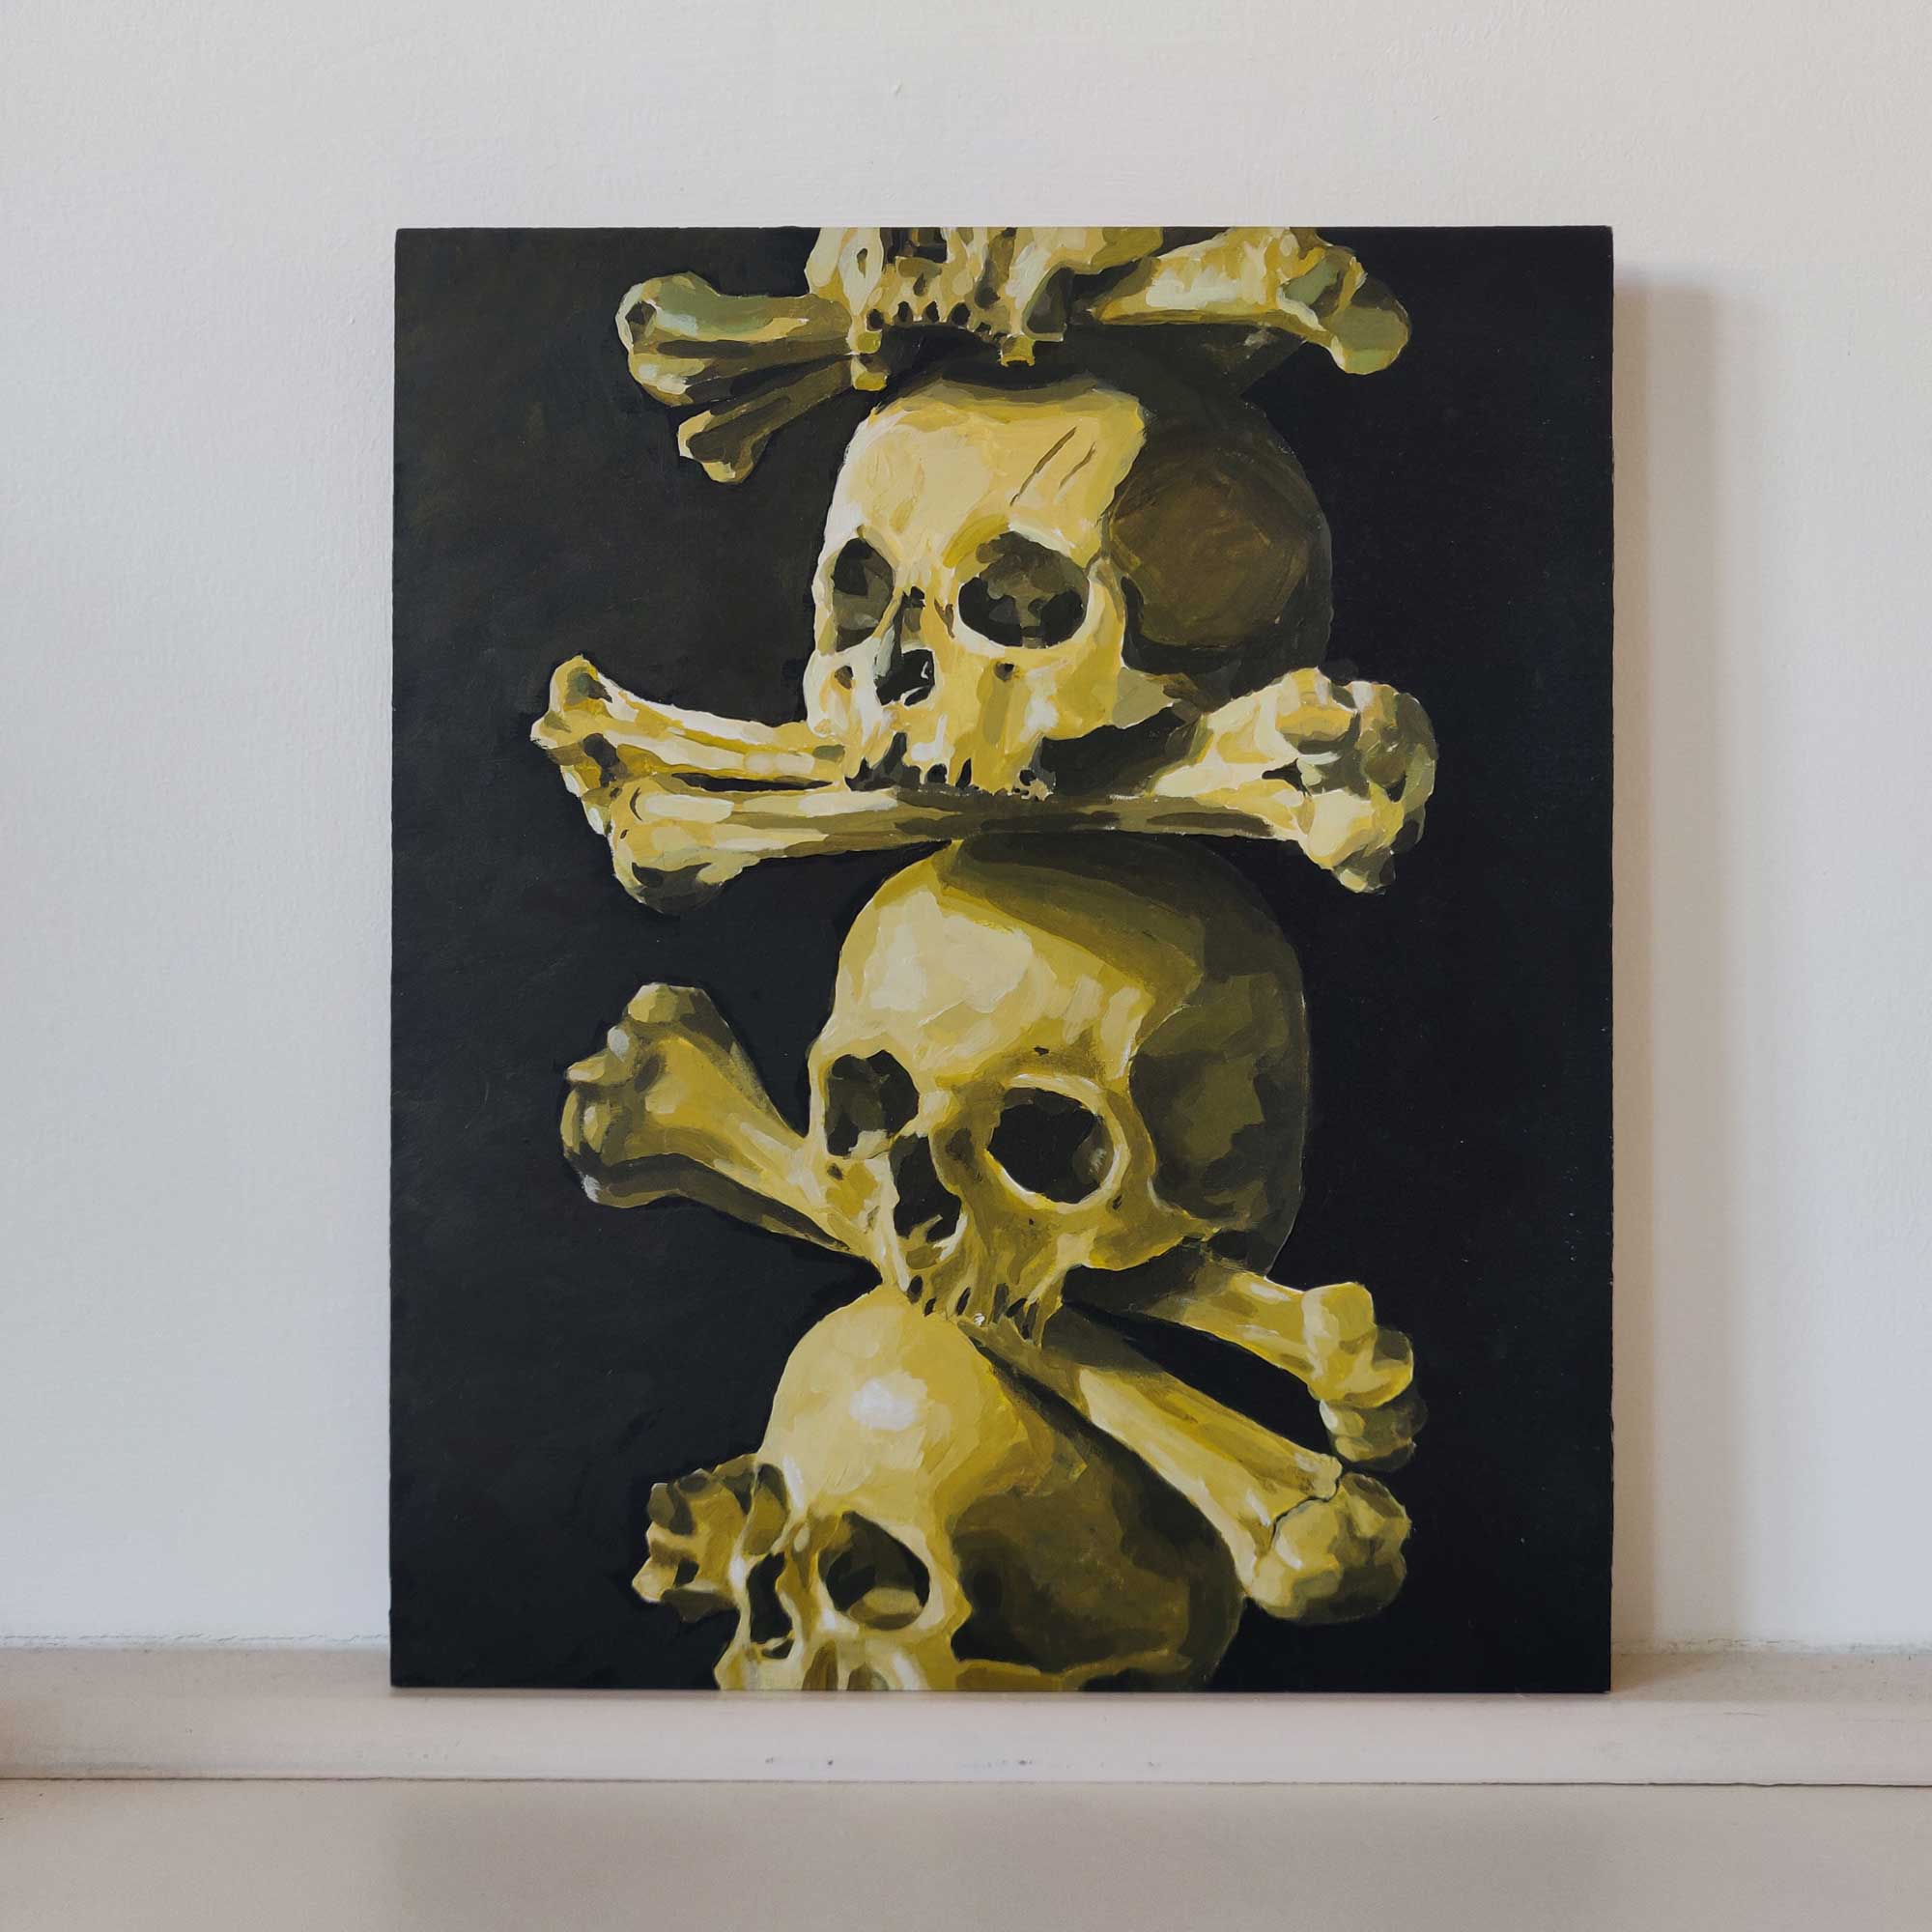 Fine Art work by Daniel Firmin showing a stack of human skulls.